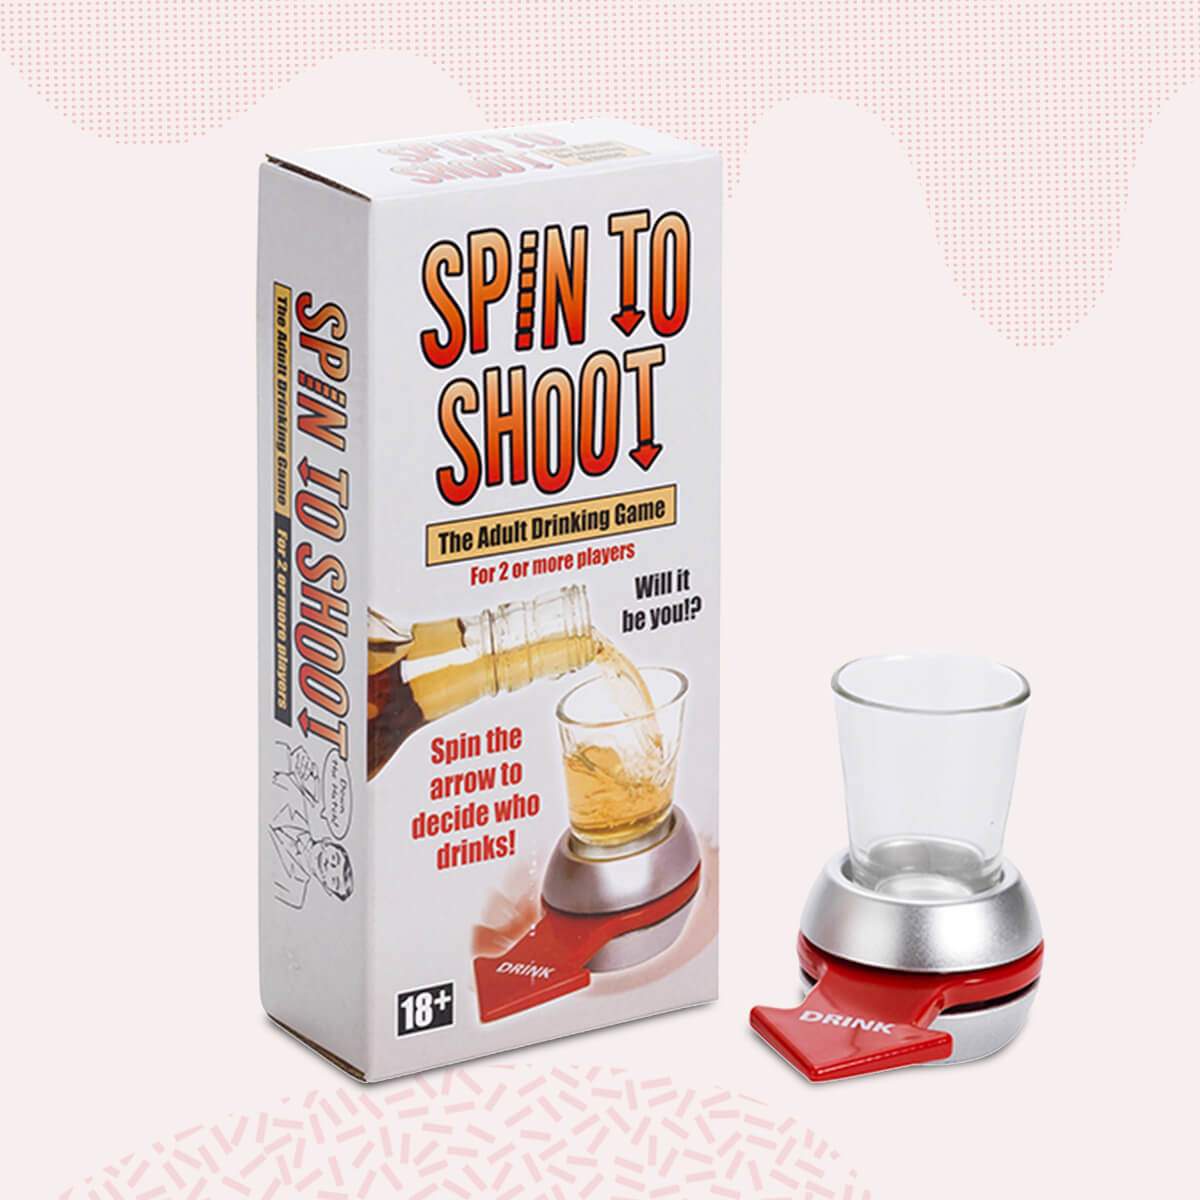 Spin to shot - Drinking Game